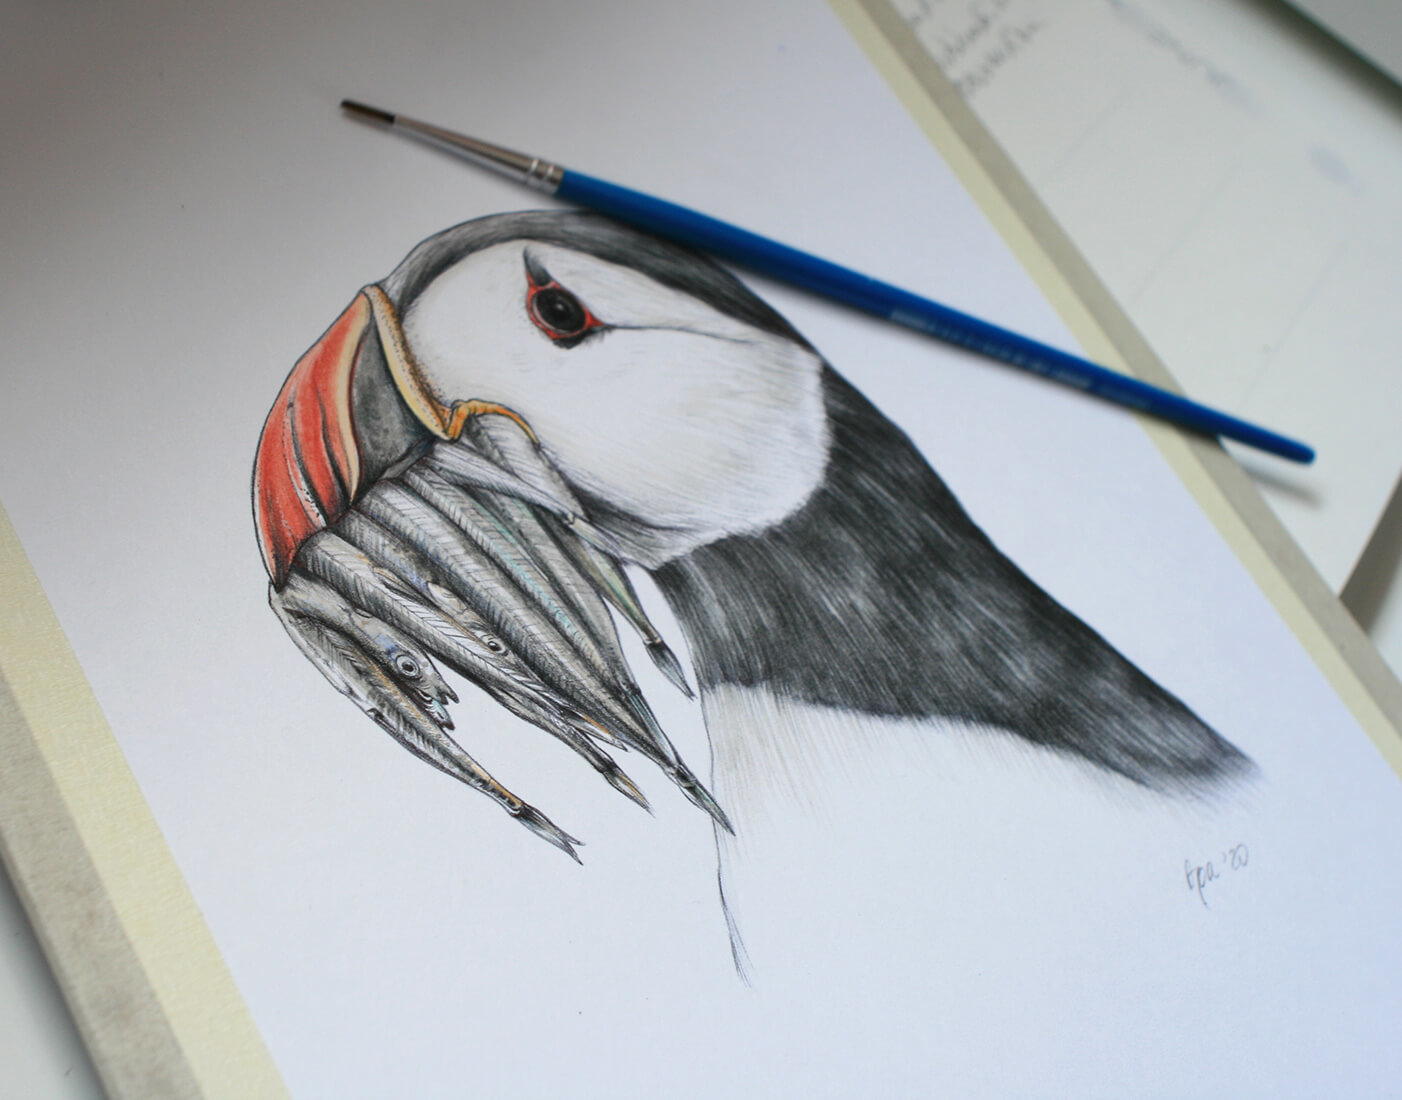 Atlantic puffin, wildlife illustration by Aga Grandowicz.